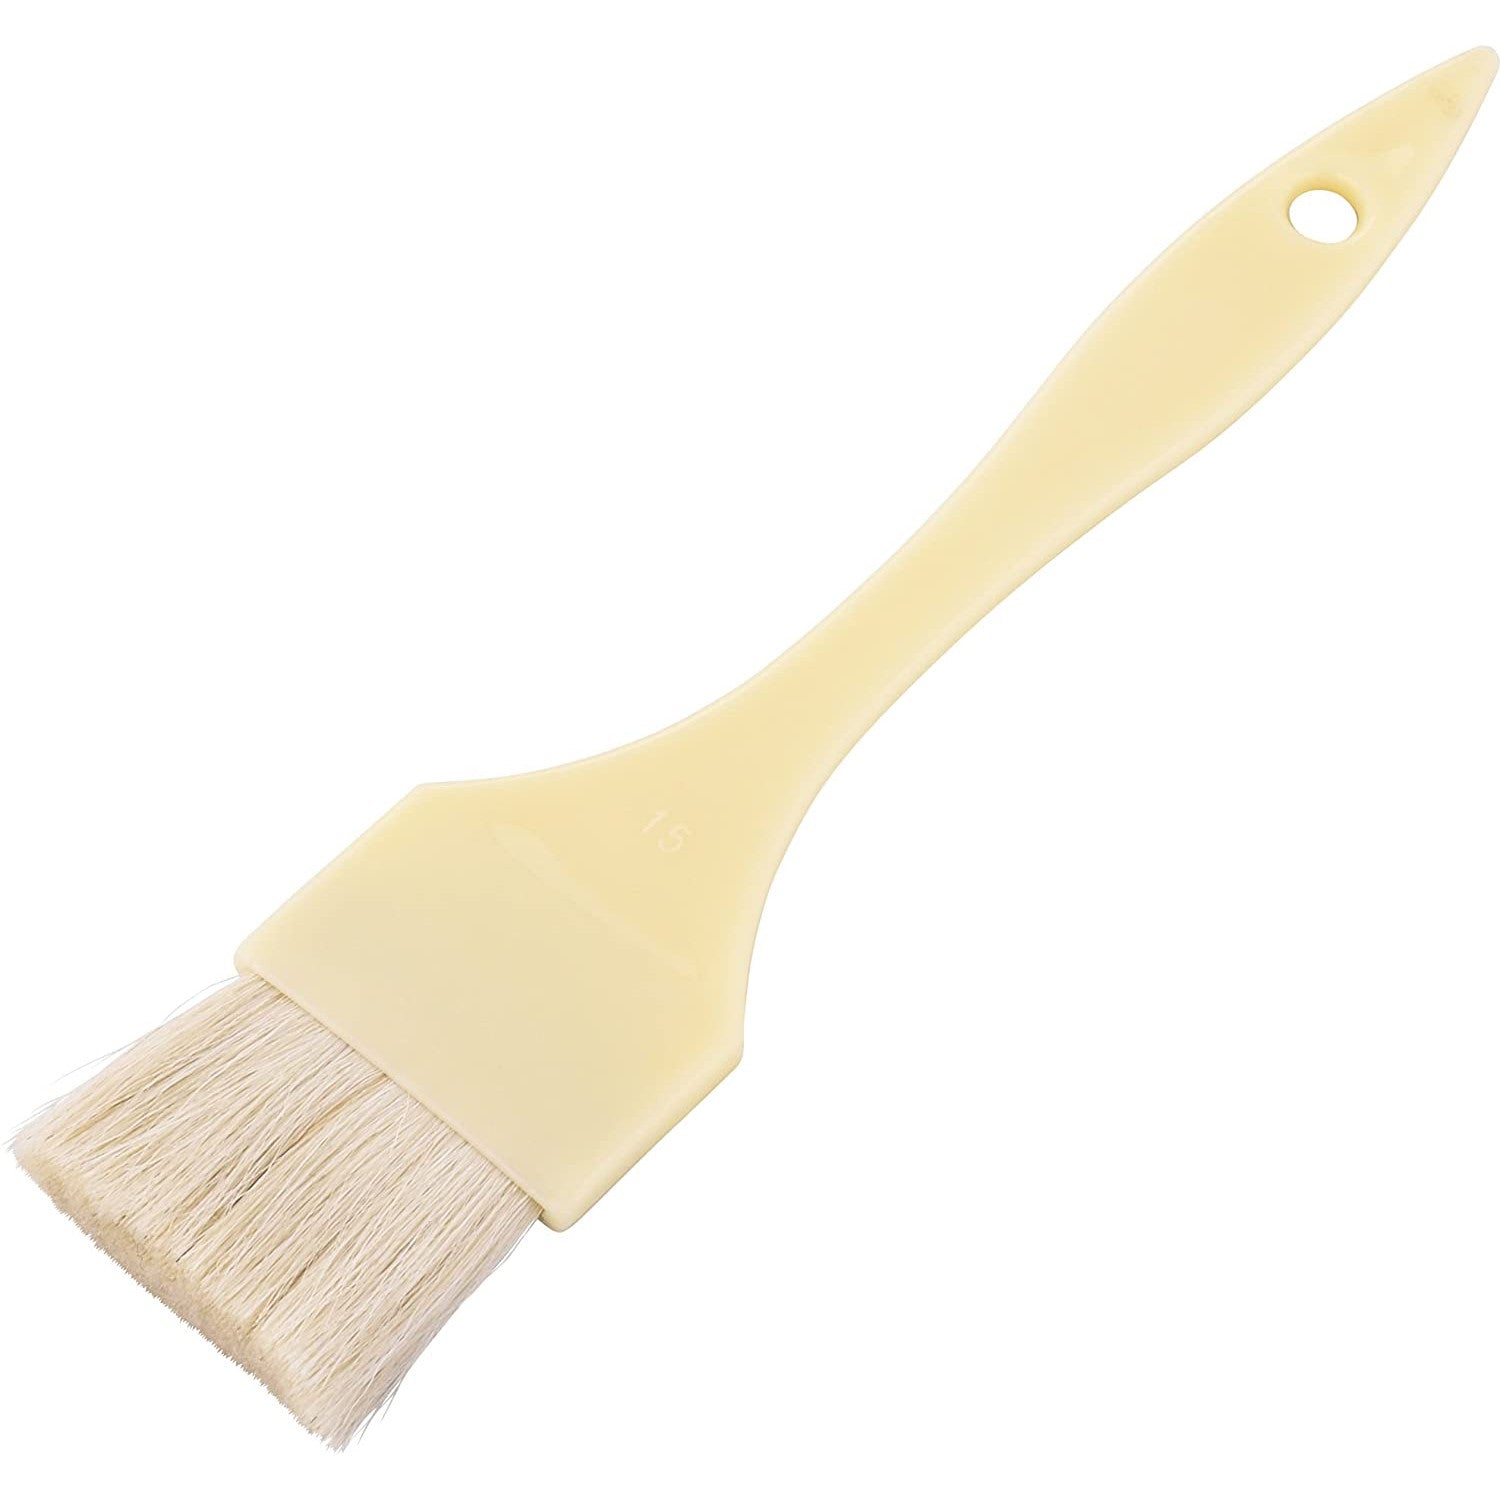 Plastic Bristle Pastry/Basting Brush 30mm White